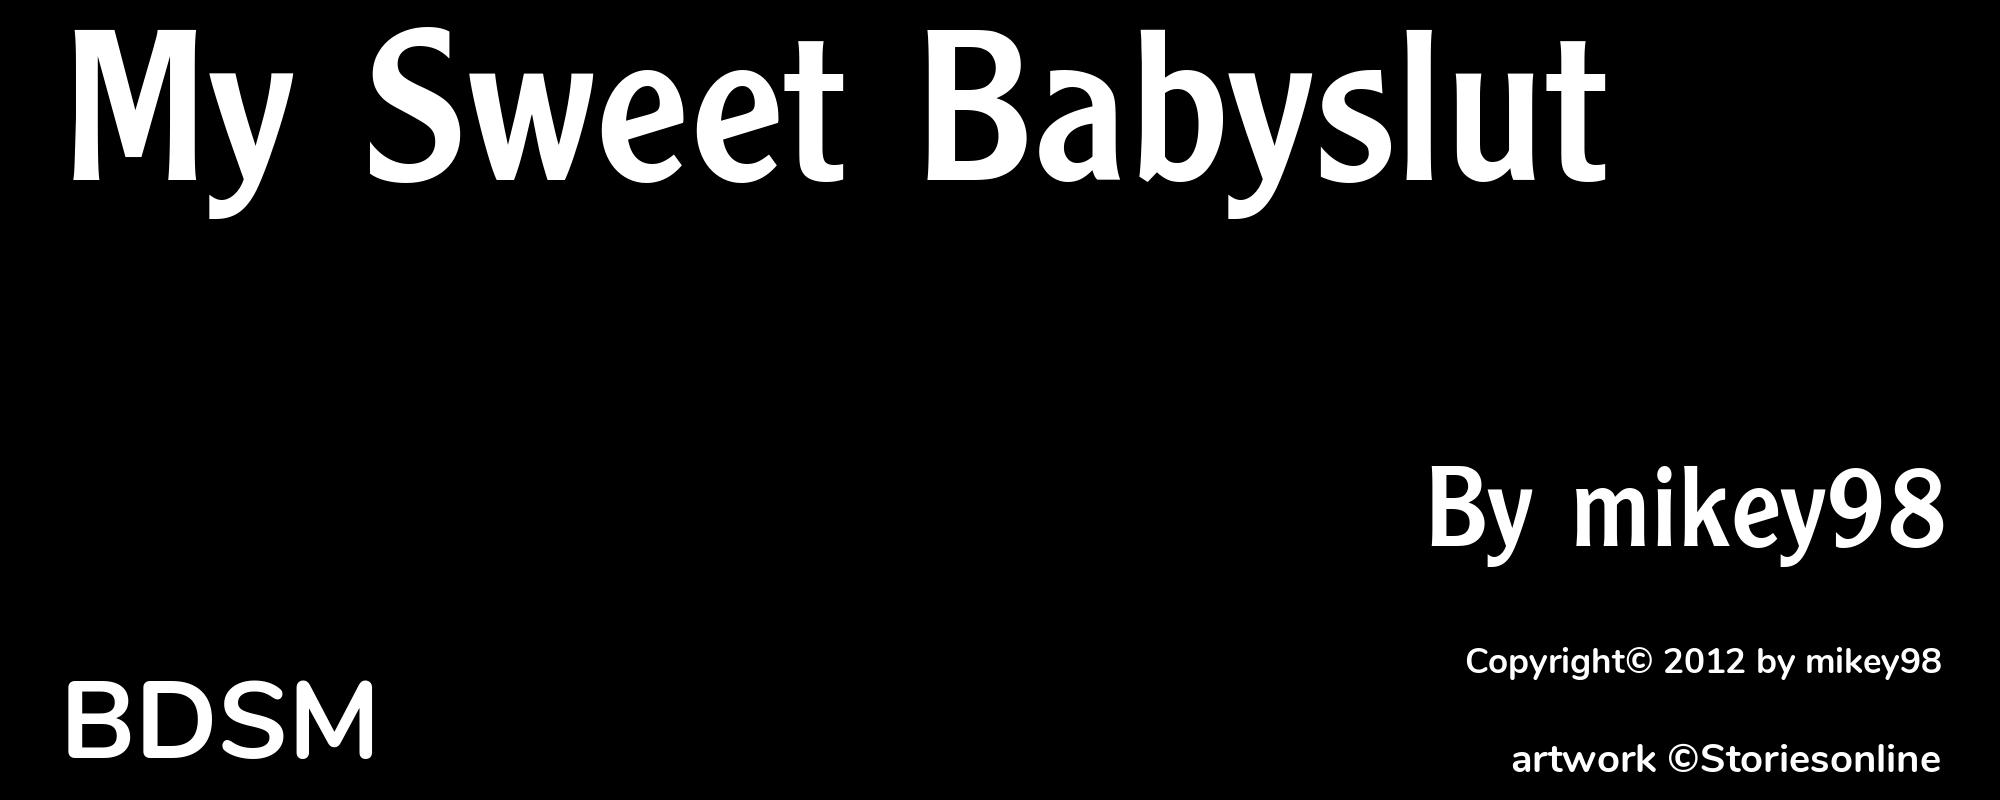 My Sweet Babyslut - Cover